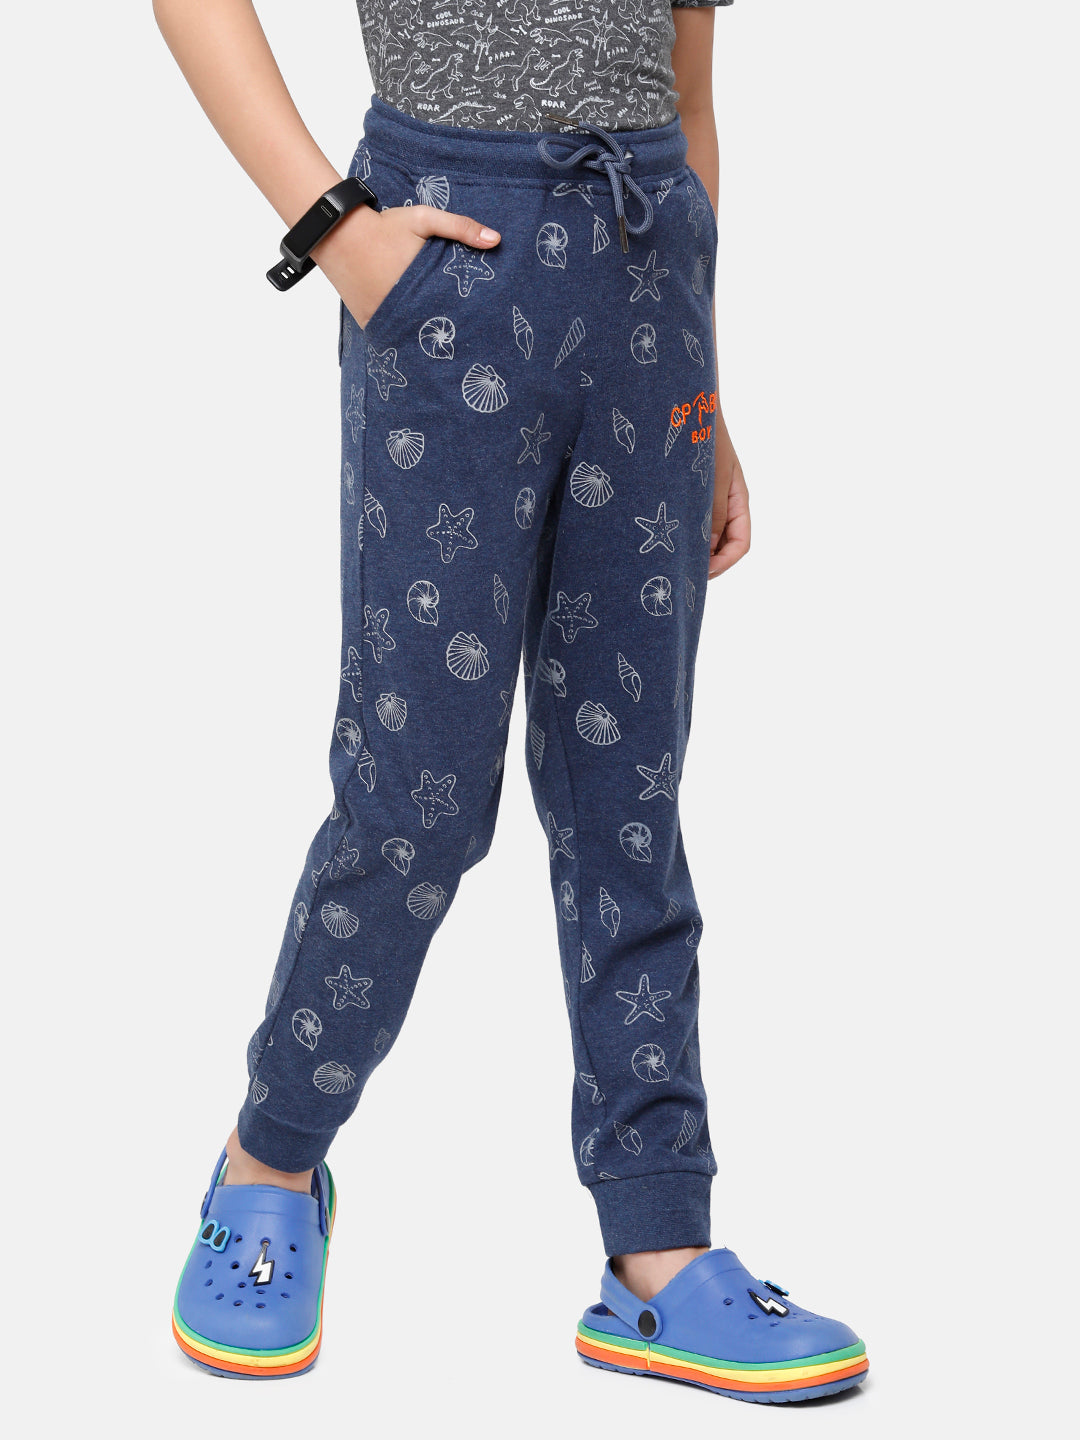 NWT Girls Kids US Polo Assn Schoolwear Khaki Pants w/ Adj Waist size varies  (BB) | eBay